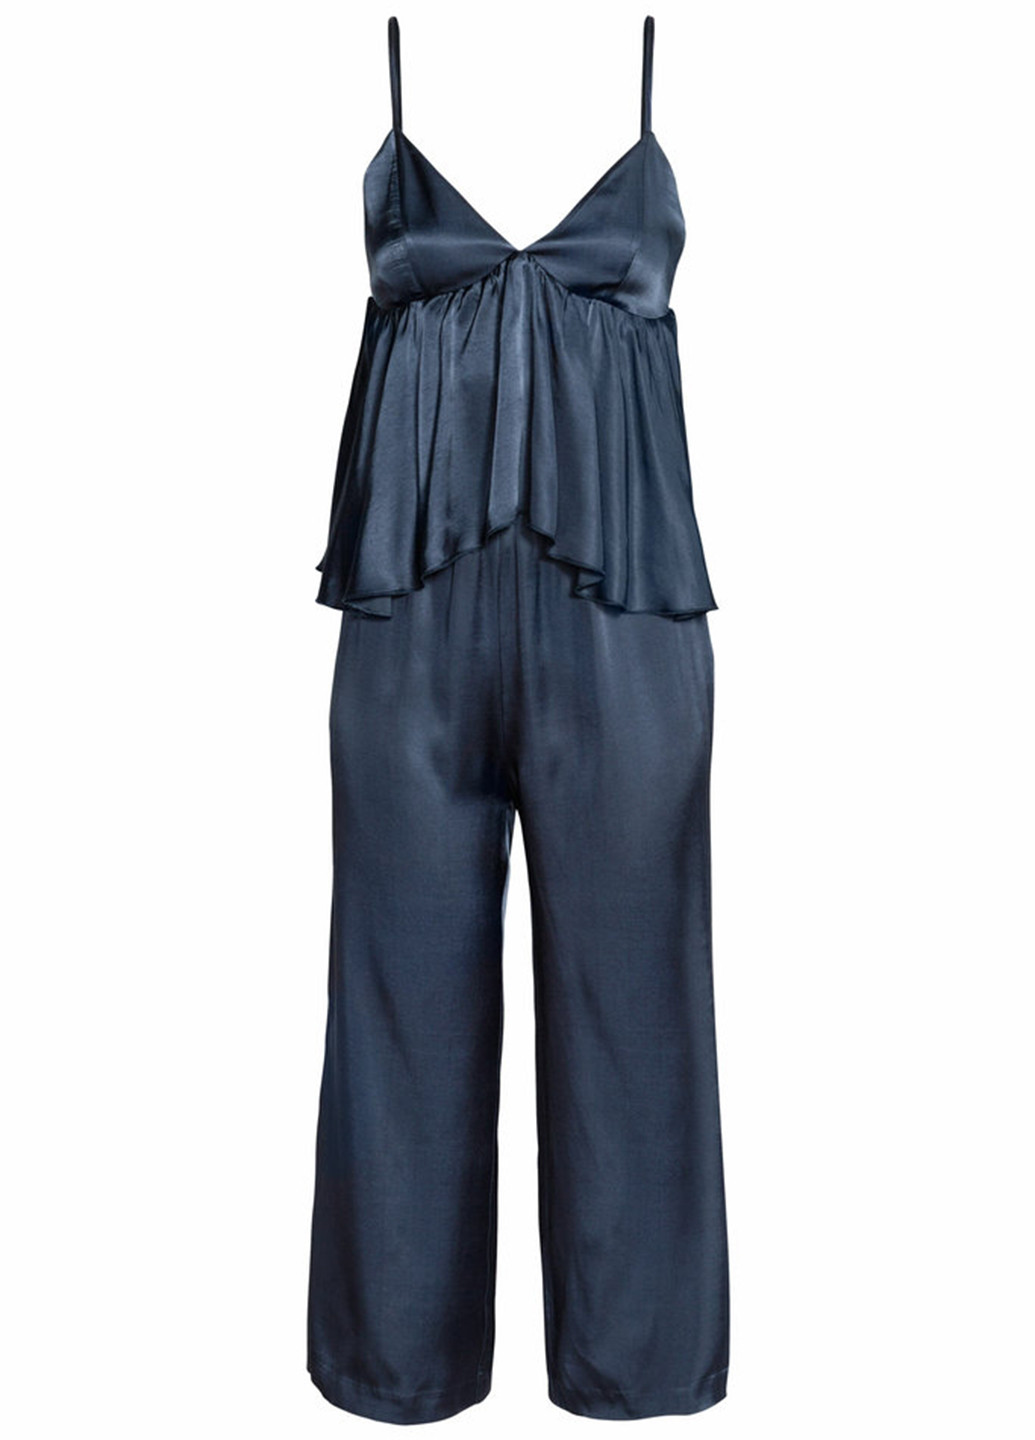 Комбинезон H&M комбинезон-брюки однотонный тёмно-синий кэжуал вискоза